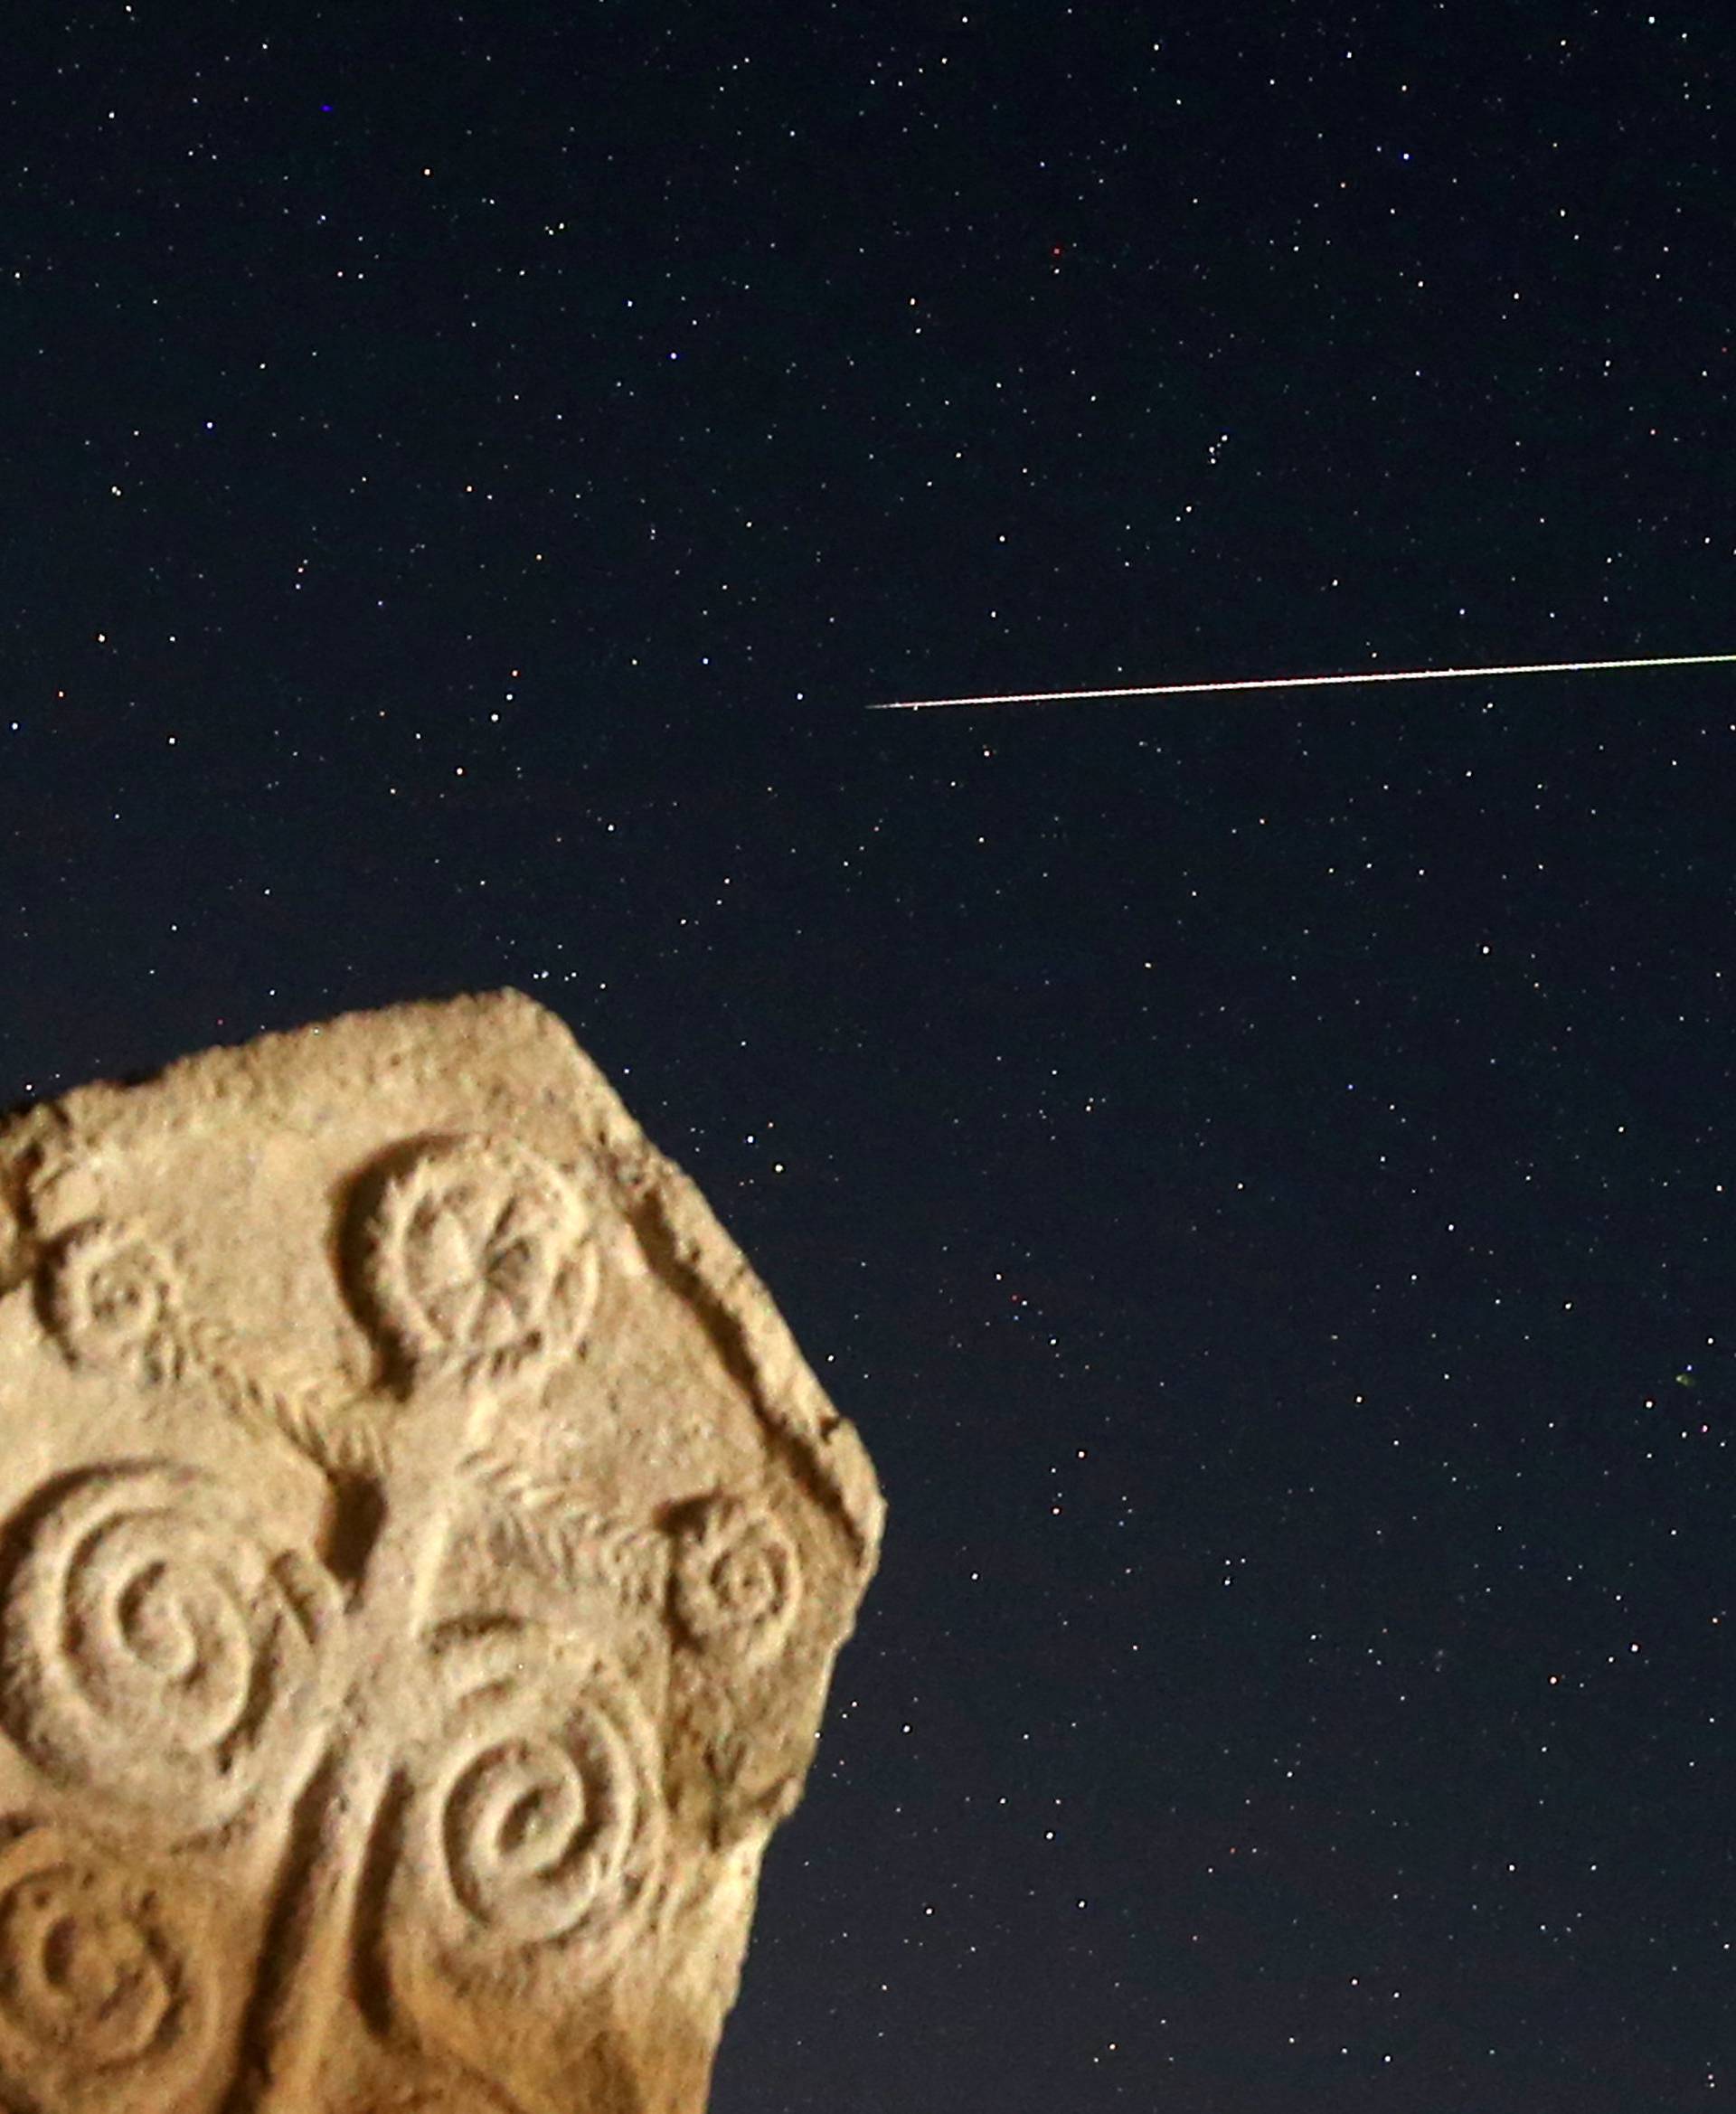 A meteor streaks past stars in the night sky above medieval tombstones in Radmilje near Stolac, south of Sarajevo